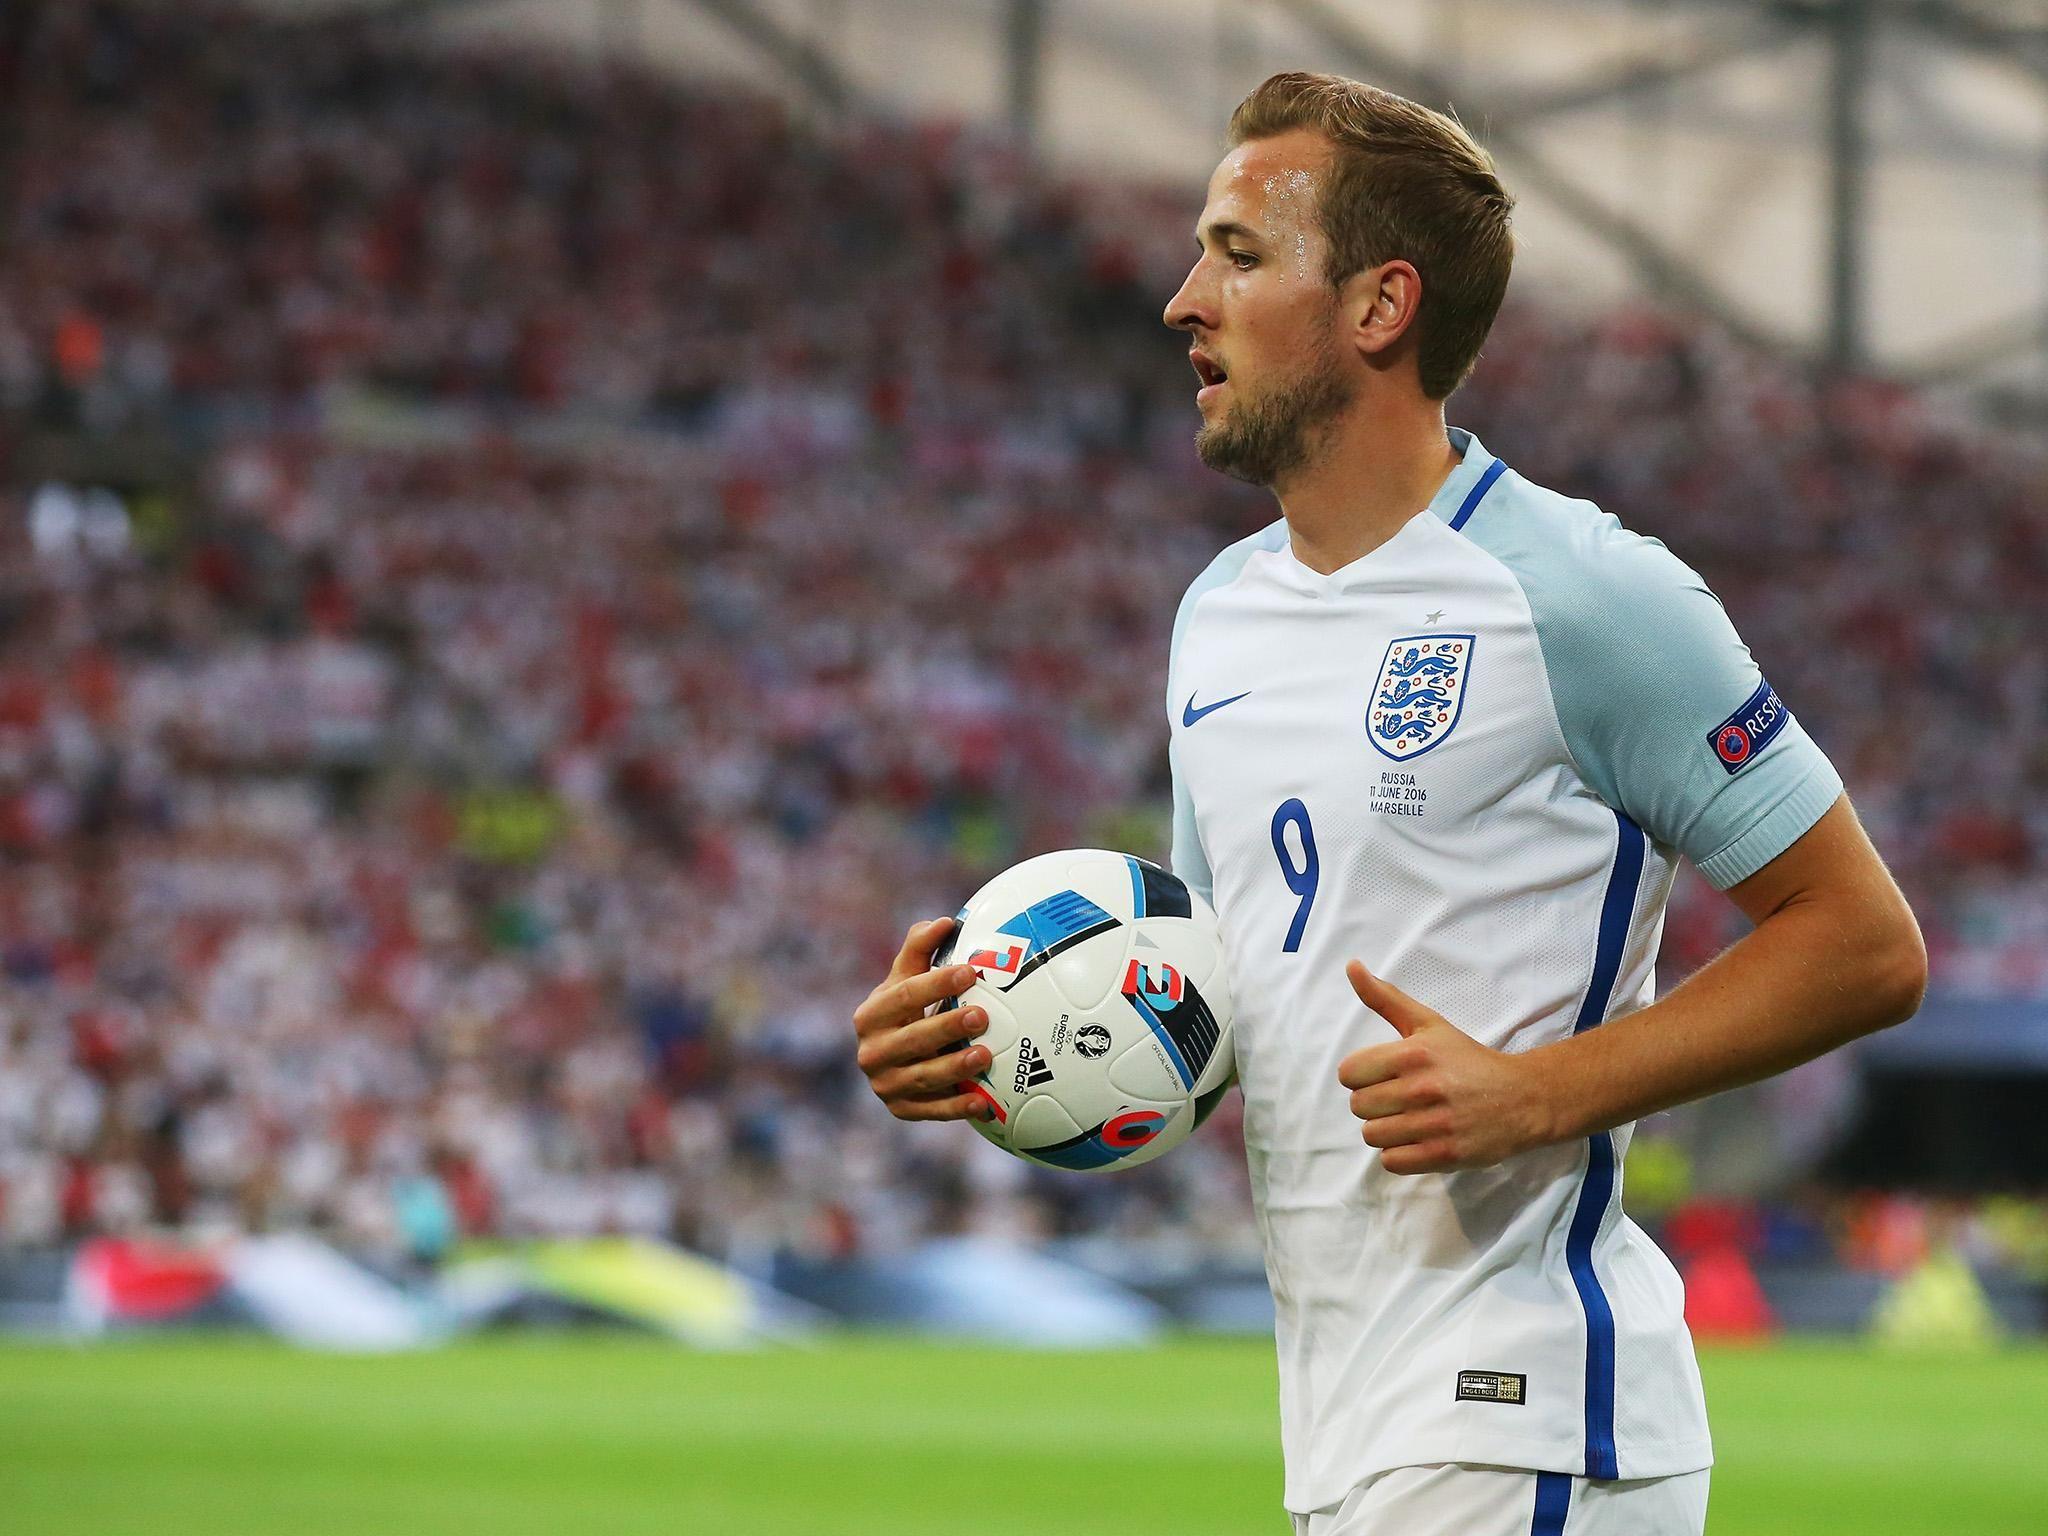 England release Harry Kane back to Tottenham before Spain game